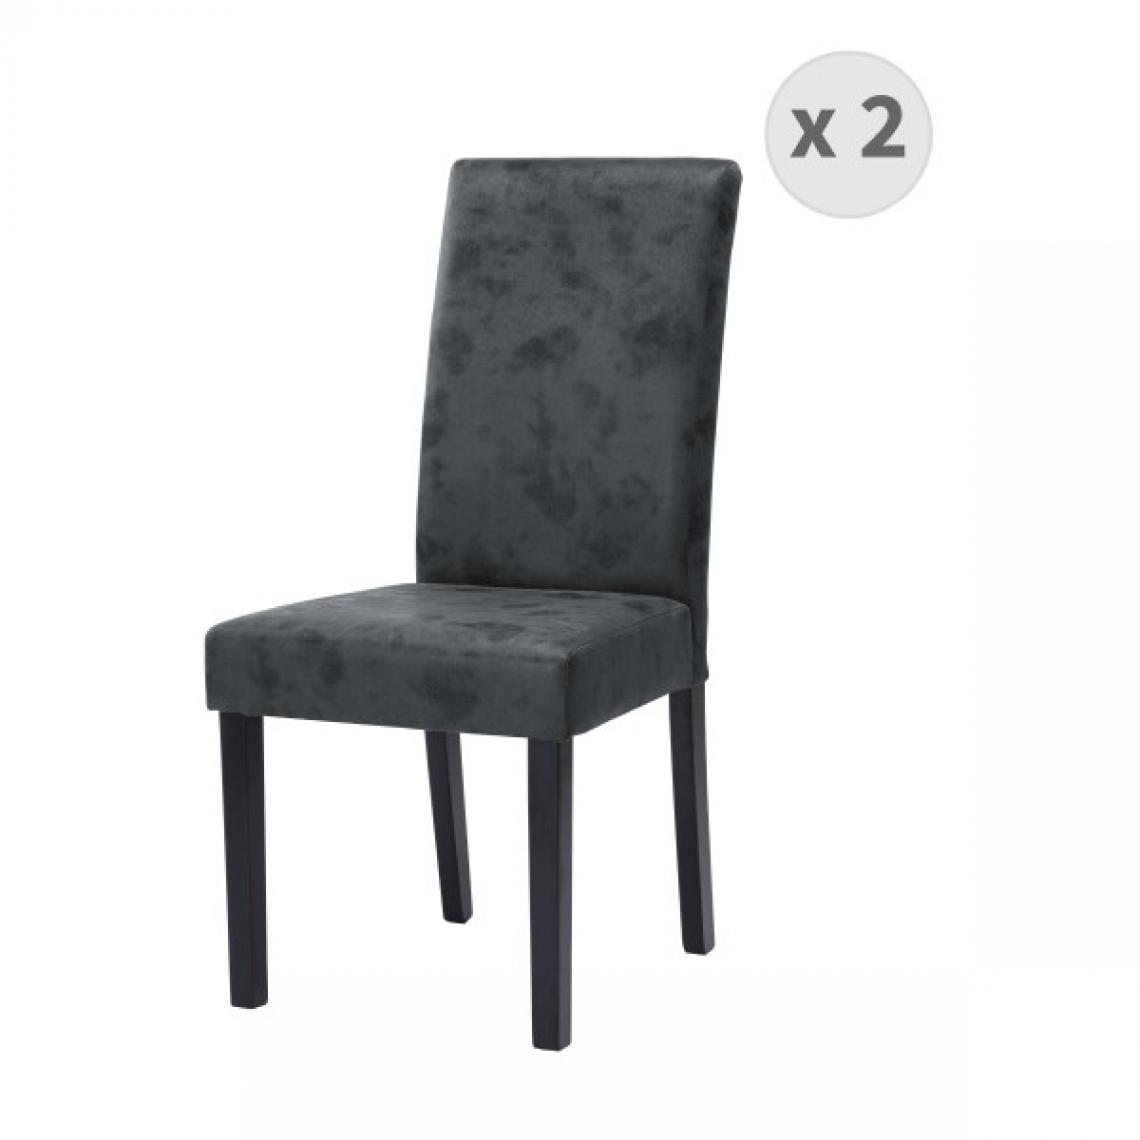 Moloo - TINITA-Chaise pied pin noir MF vintage grise (x2) - Chaises